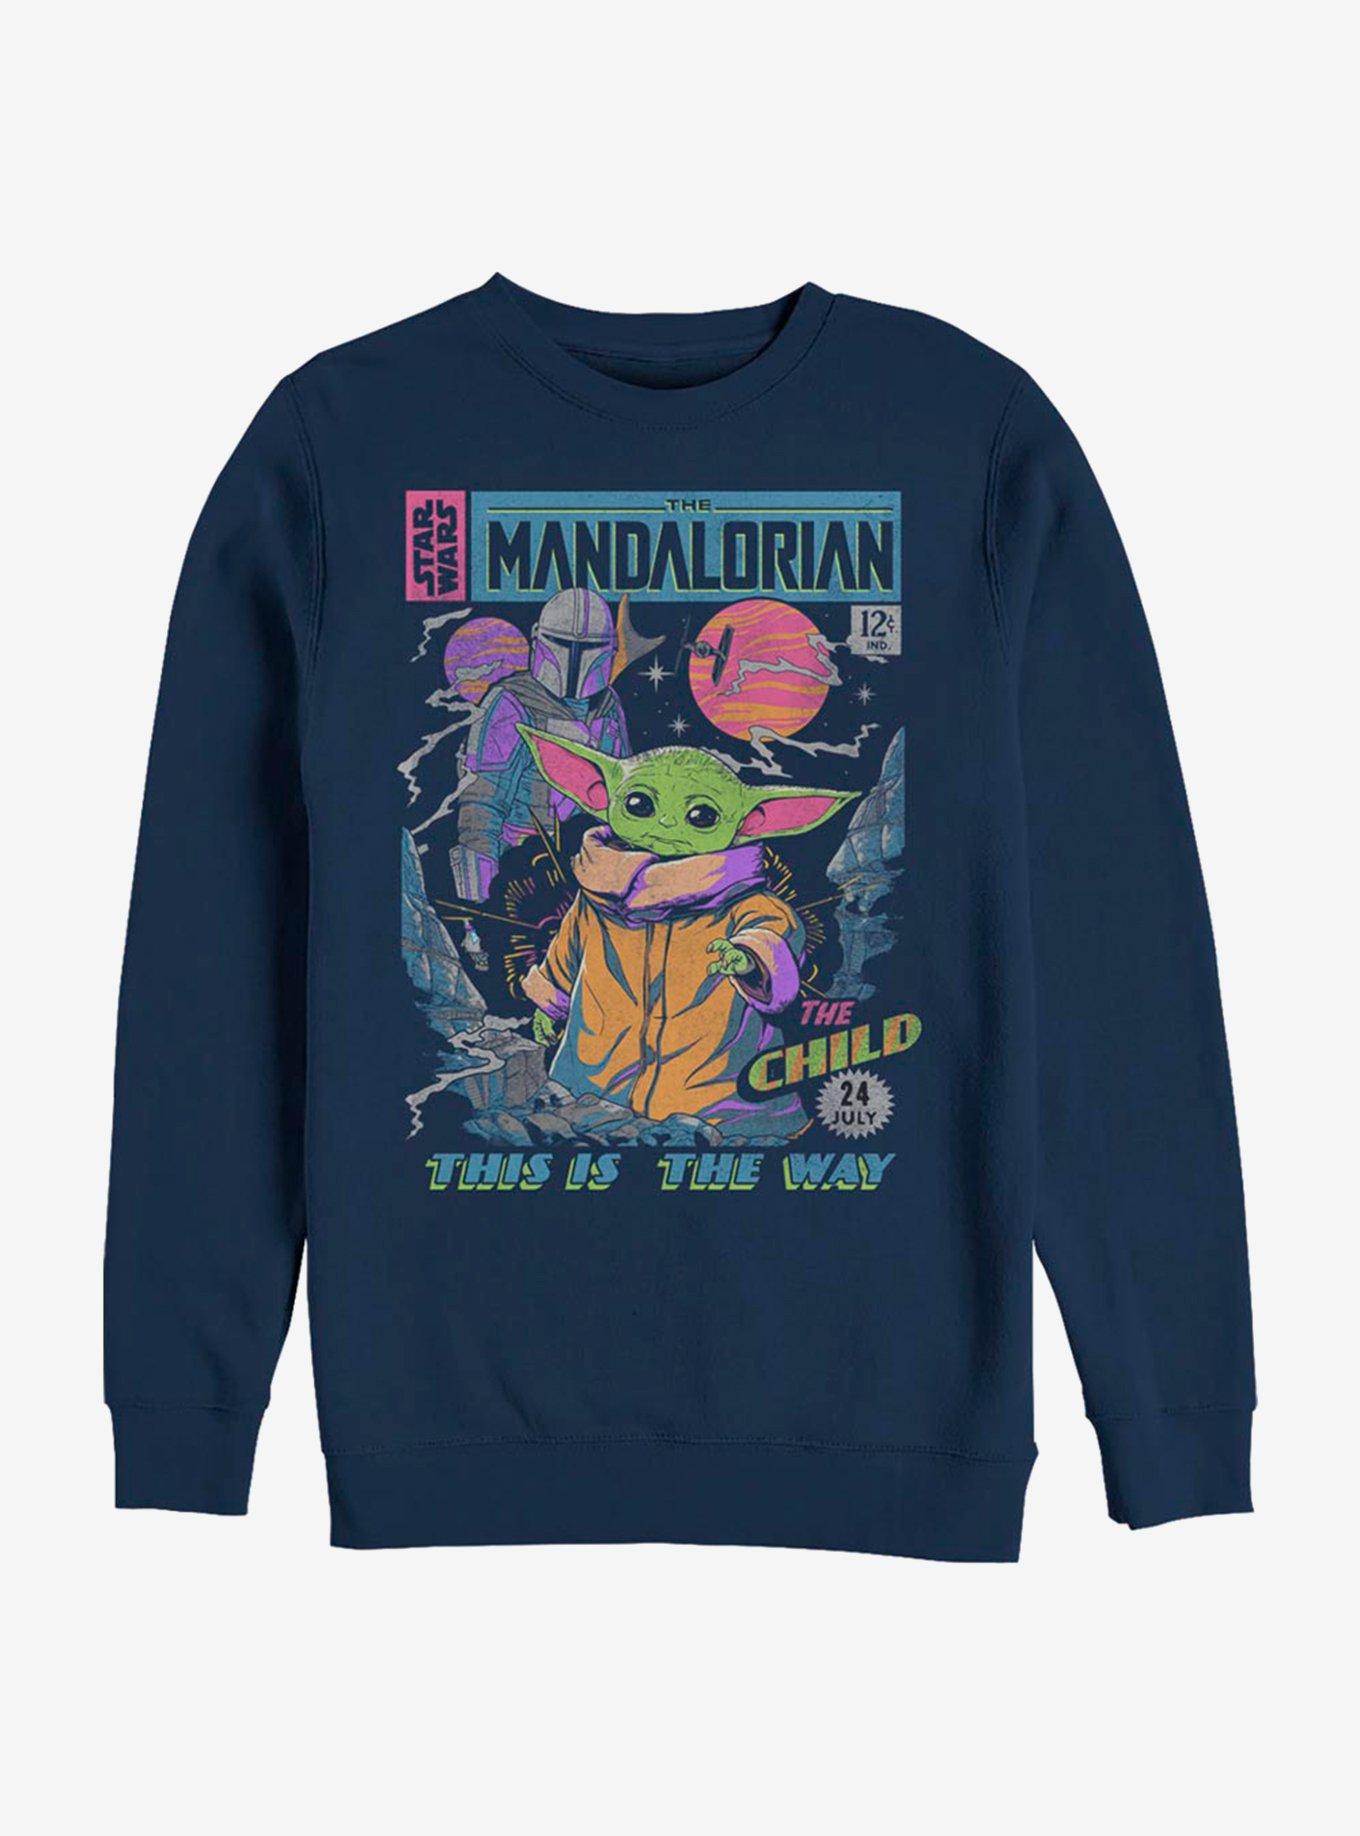 Star Wars The Mandalorian The Child Neon Poster Sweatshirt, NAVY, hi-res